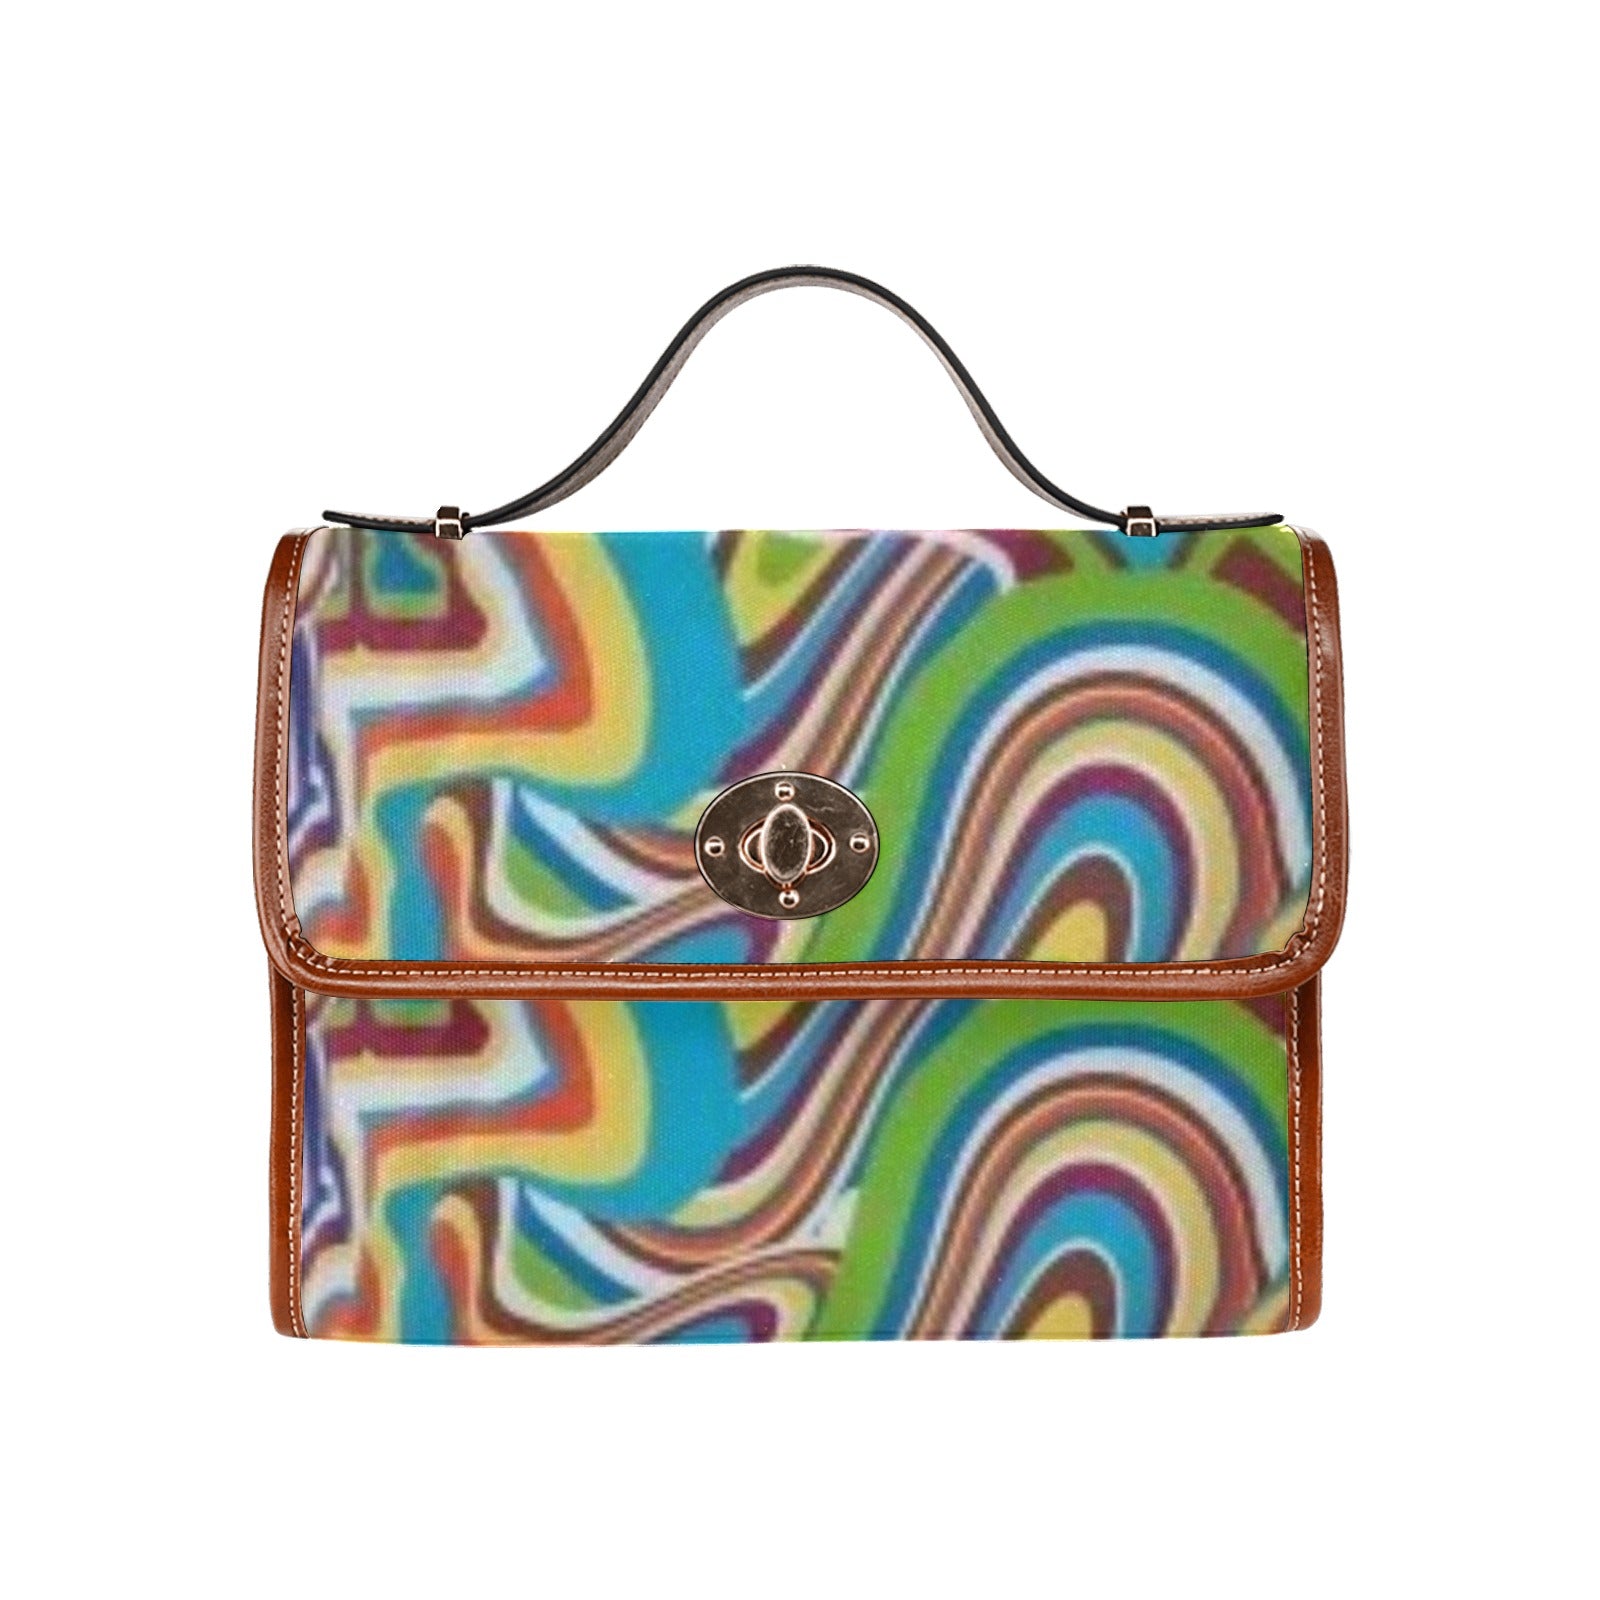 fz abstract handbag all over print waterproof canvas bag(model1641)(brown strap)